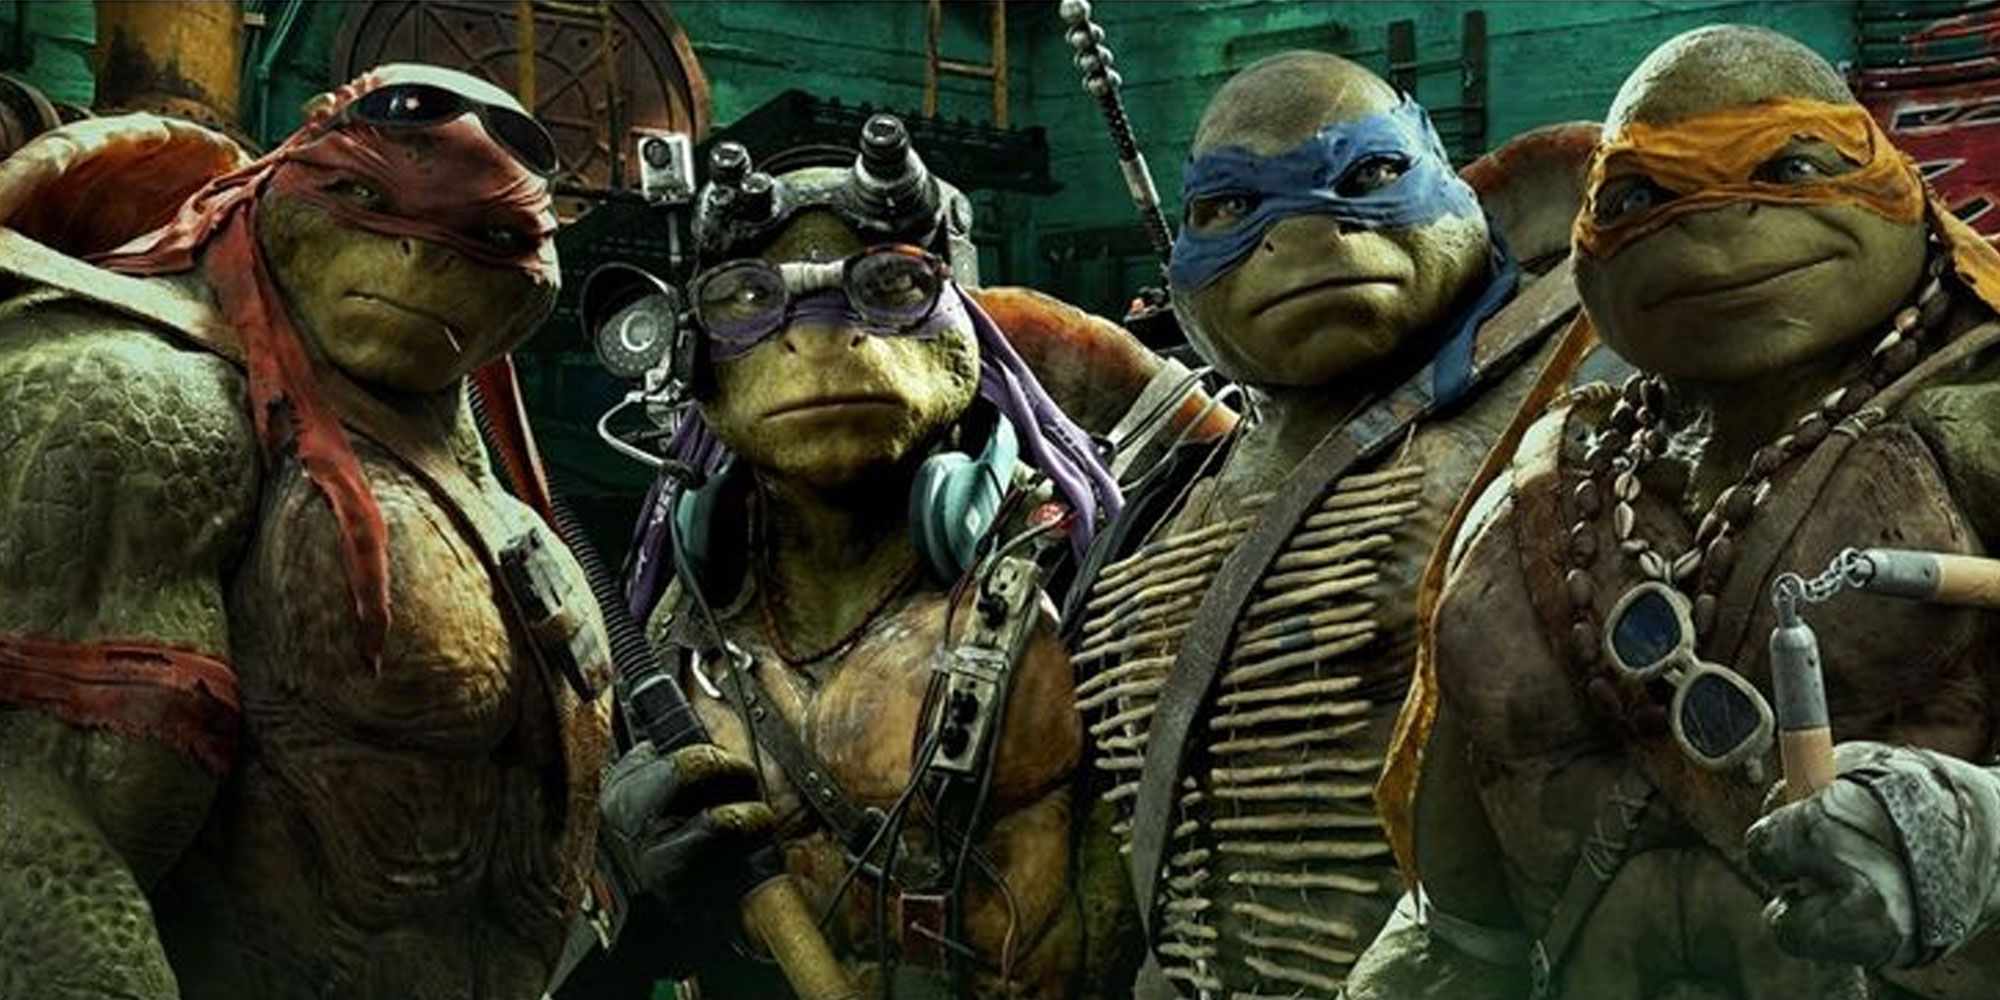 A closeup of the modern Ninja Turtles in Michael Bay's movie